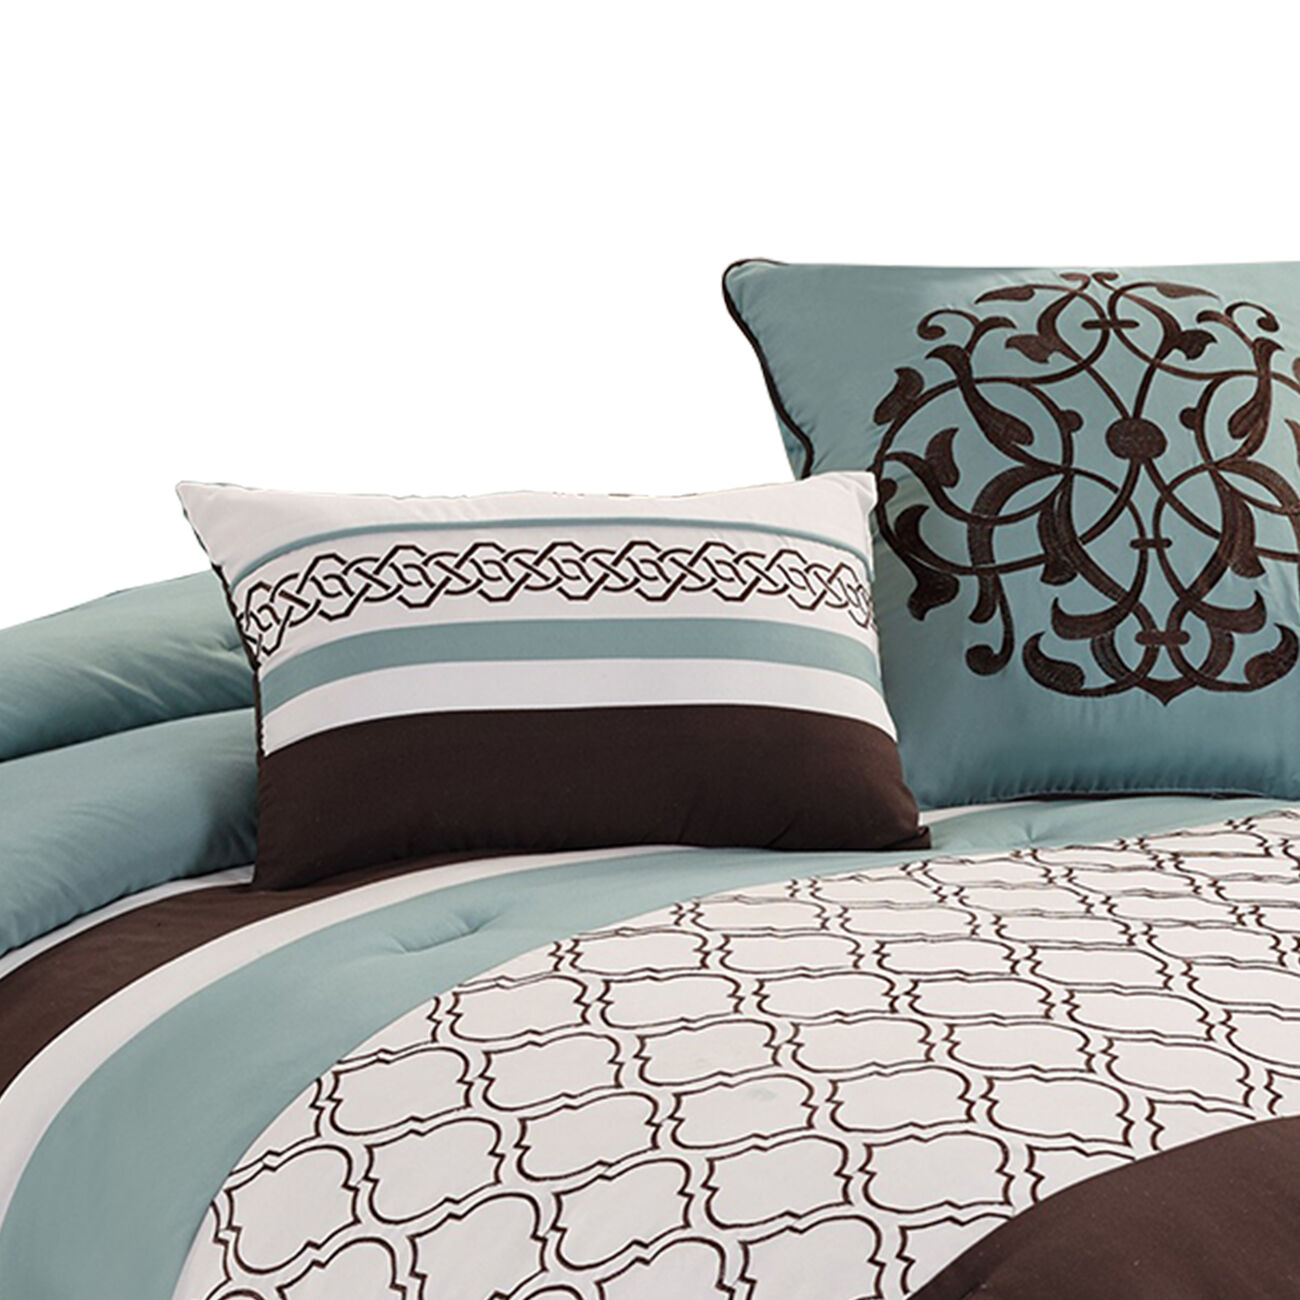 Quatrefoil Queen Size 8 Piece Fabric Comforter Set , Brown and Blue